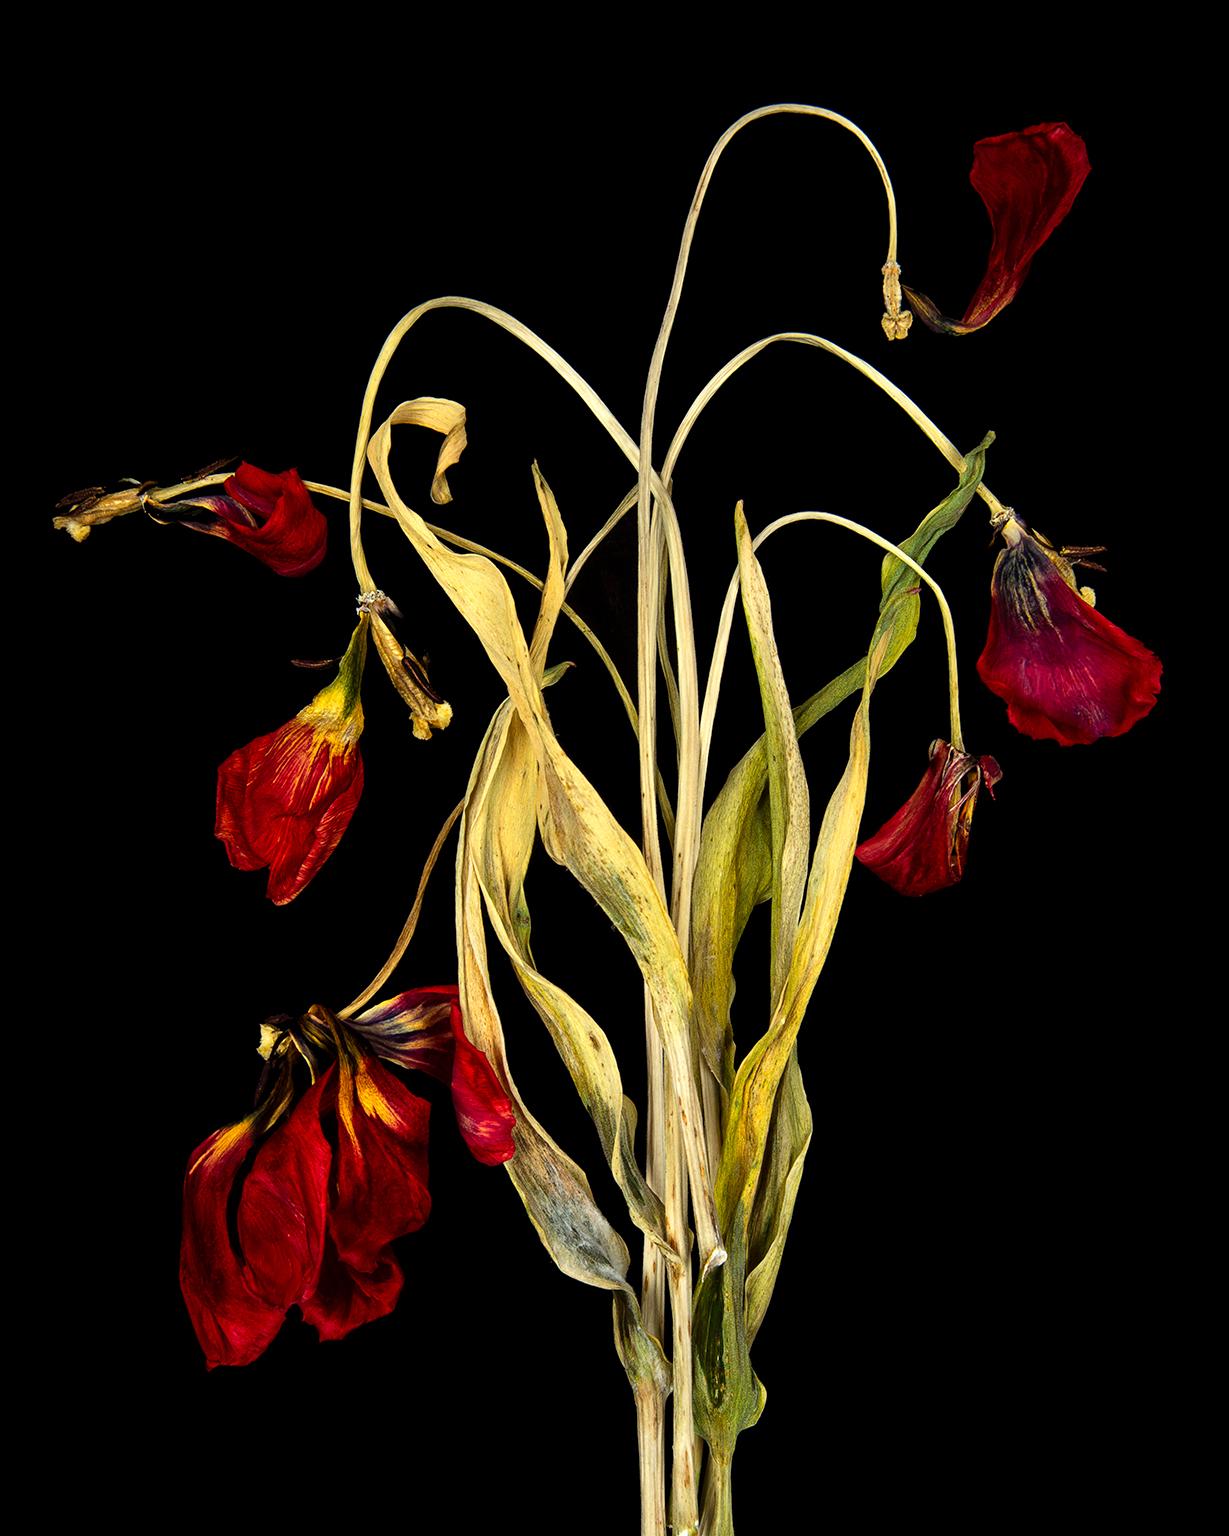 “Tulips No. 3”, Toronto, Ontario, 2018. Archival Pigment Print, 30